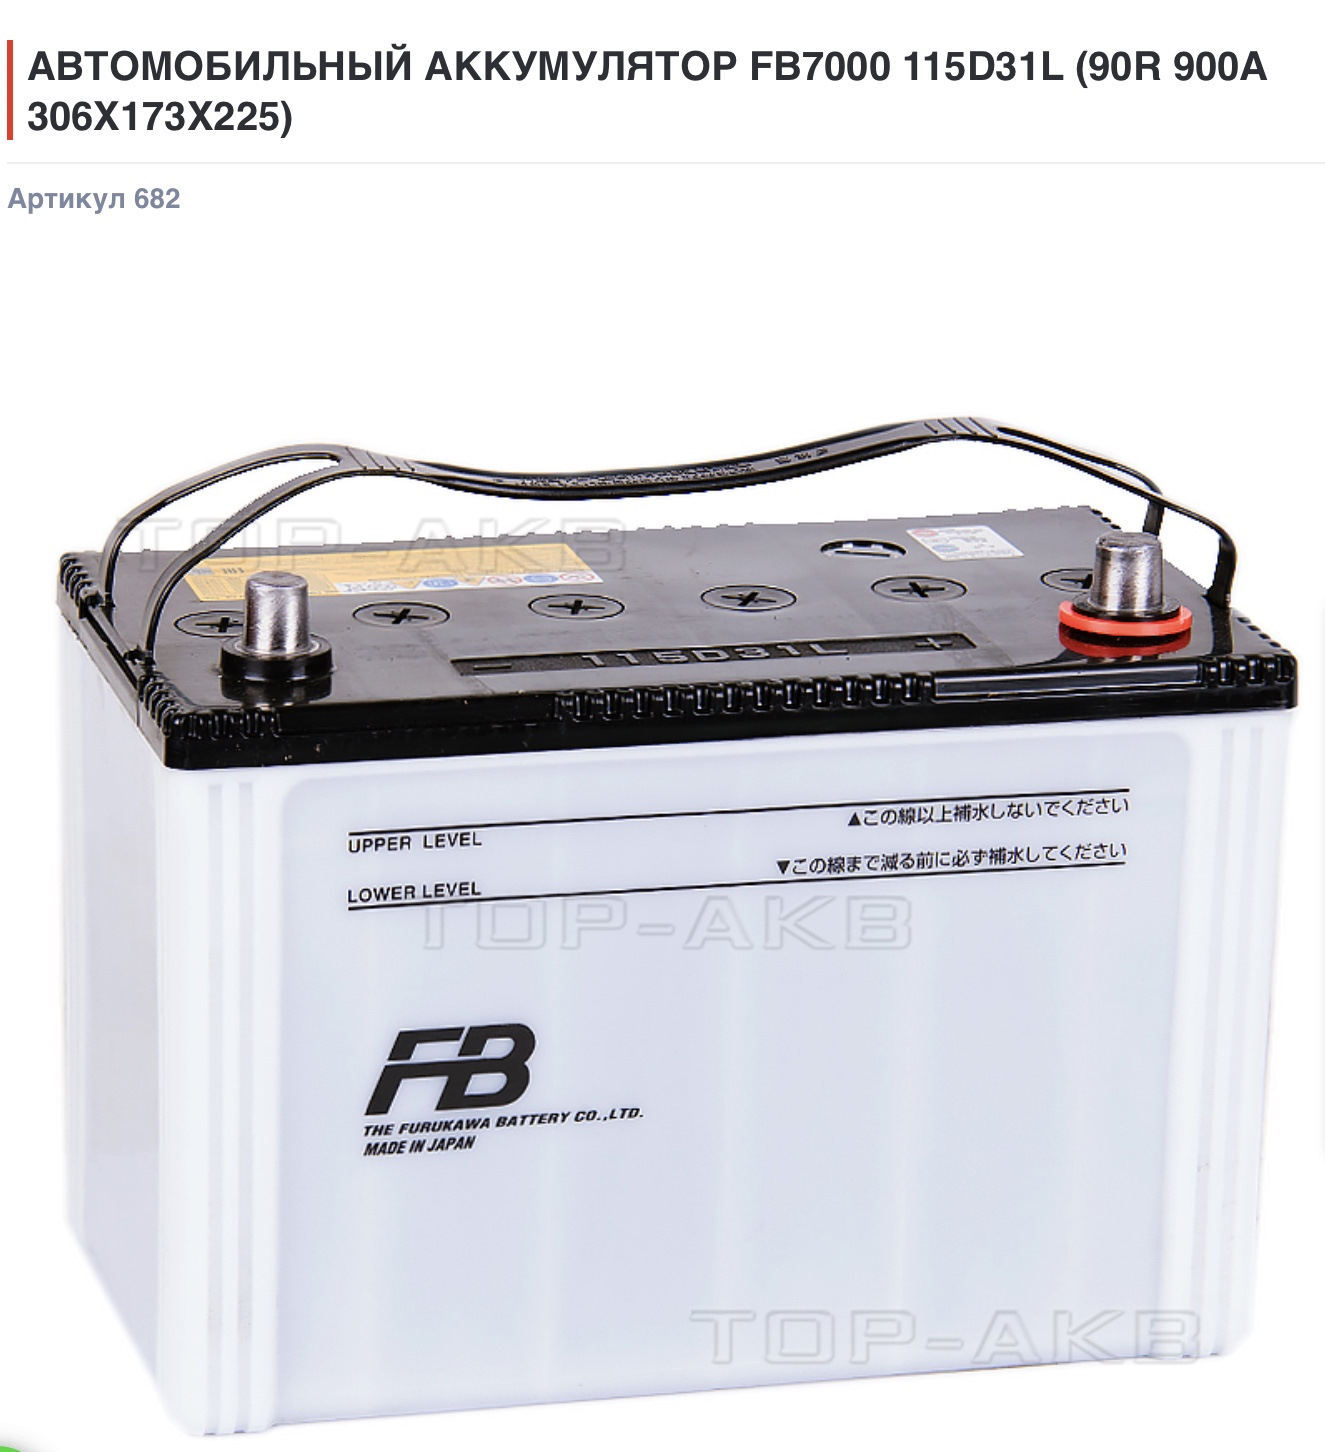 Furukawa battery fb. Автомобильный аккумулятор Furukawa Battery fb7000 115d31l. Автомобильный аккумулятор Furukawa Battery fb7000 90d26l. Аккумулятор super fb 7000 115 (115d31l), Furukawa. Furukawa 105d31r аккумулятор fb (jis) 90 Ач 306x173x220 en700 fb 105d31r.